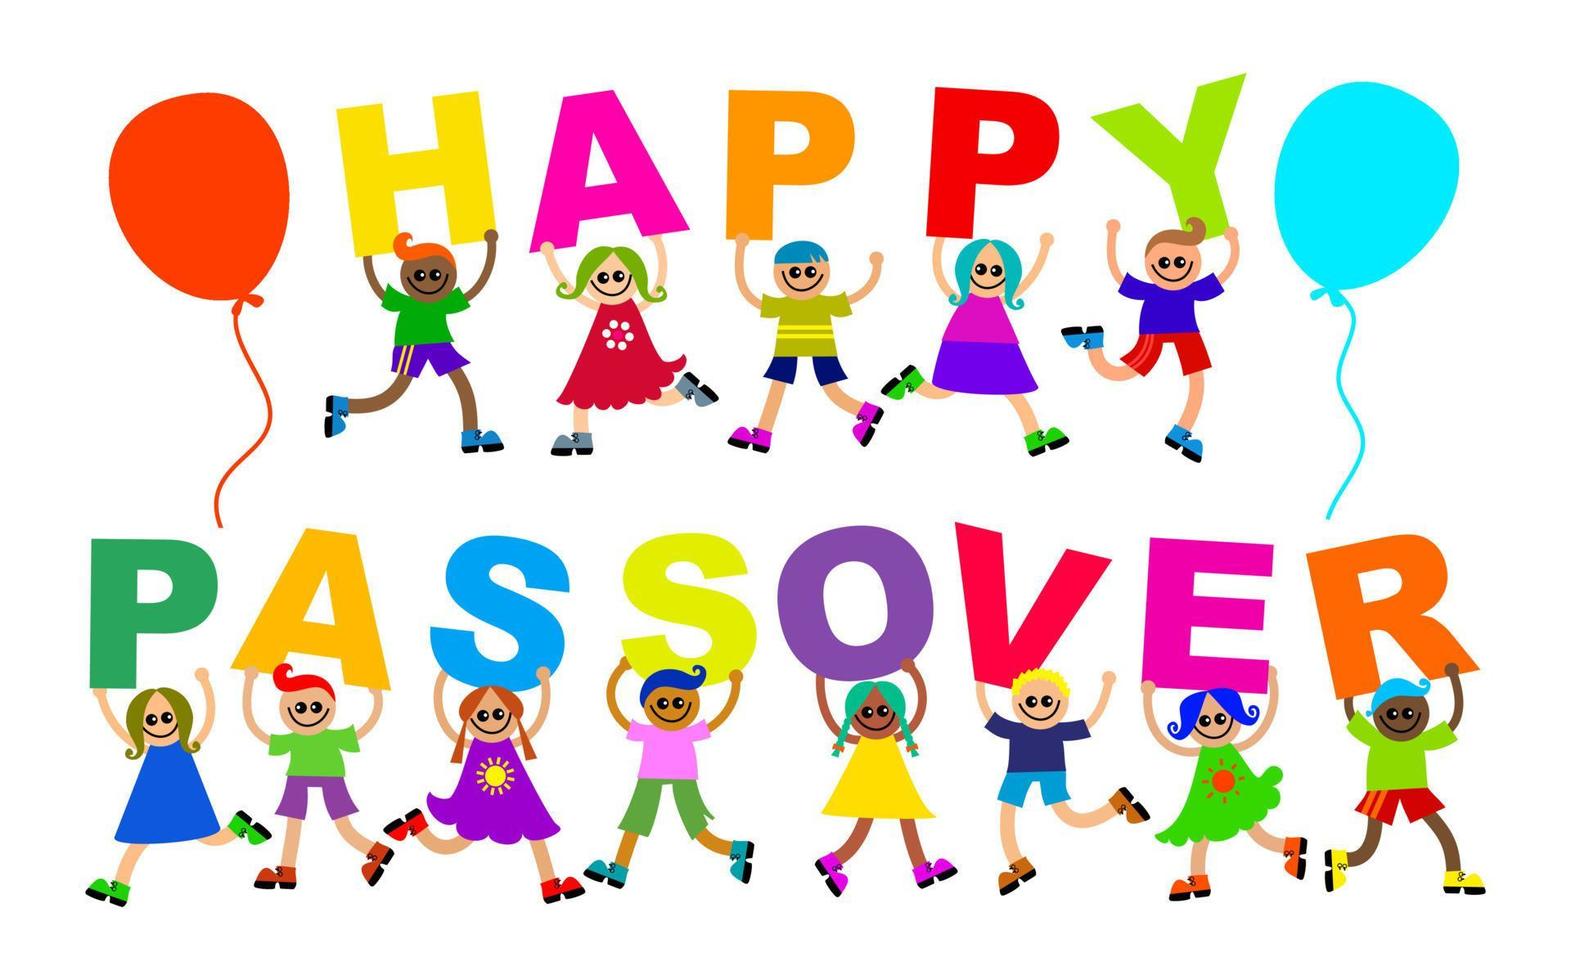 Happy Passover Kids Celebration Text vector